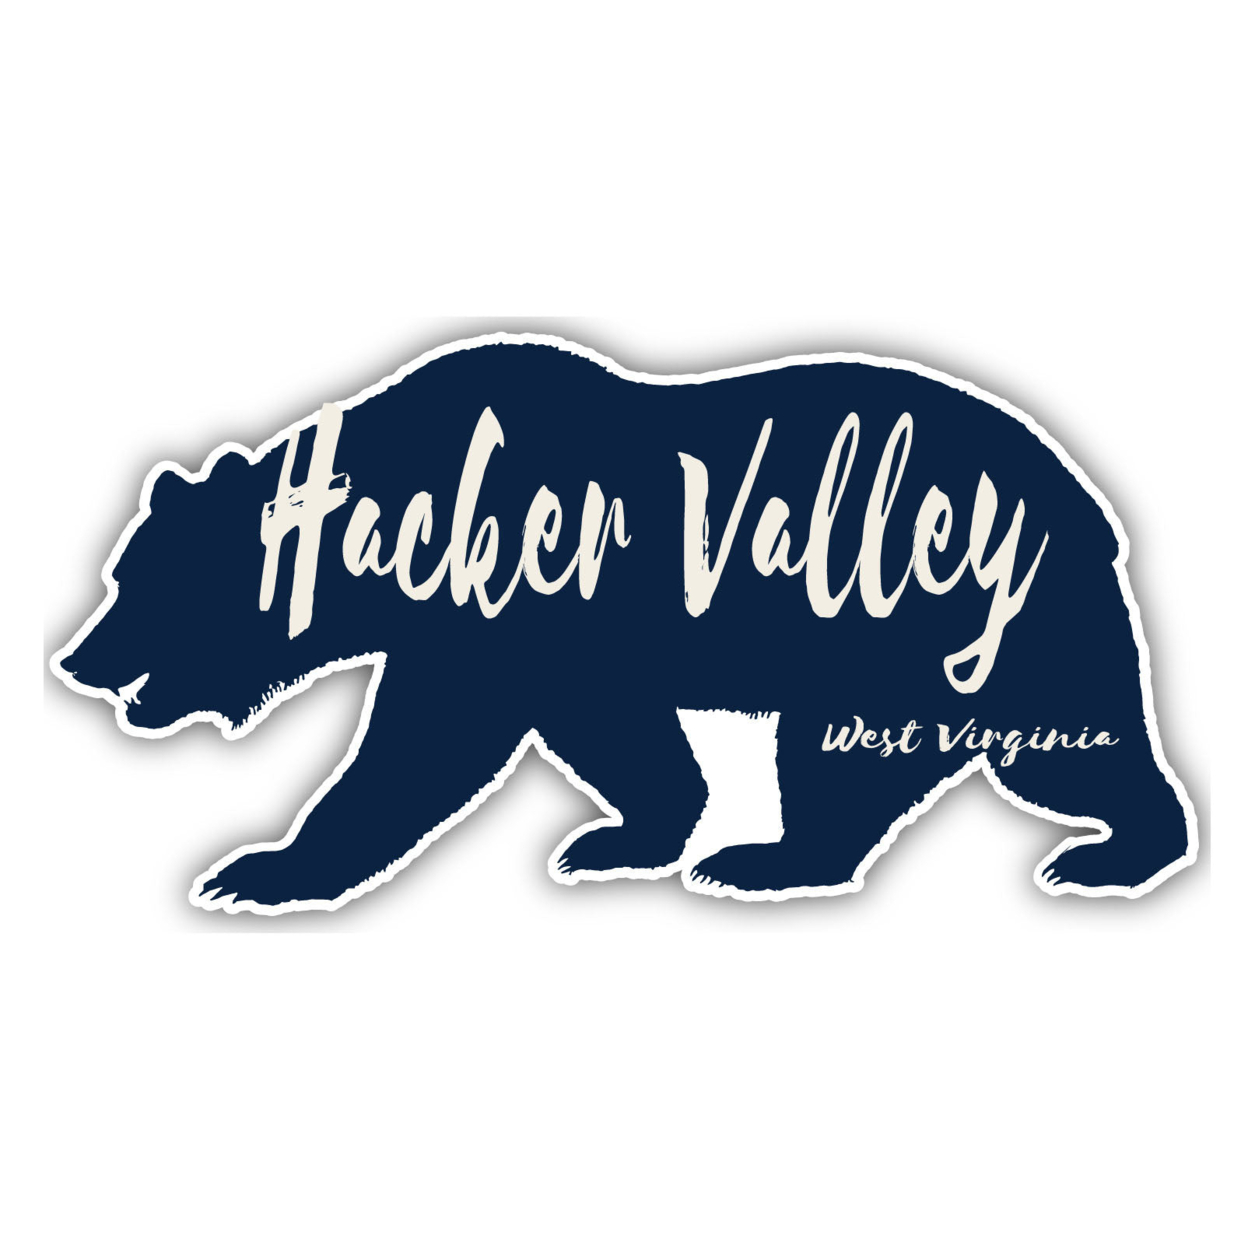 Hacker Valley West Virginia Souvenir Decorative Stickers (Choose Theme And Size) - Single Unit, 12-Inch, Bear